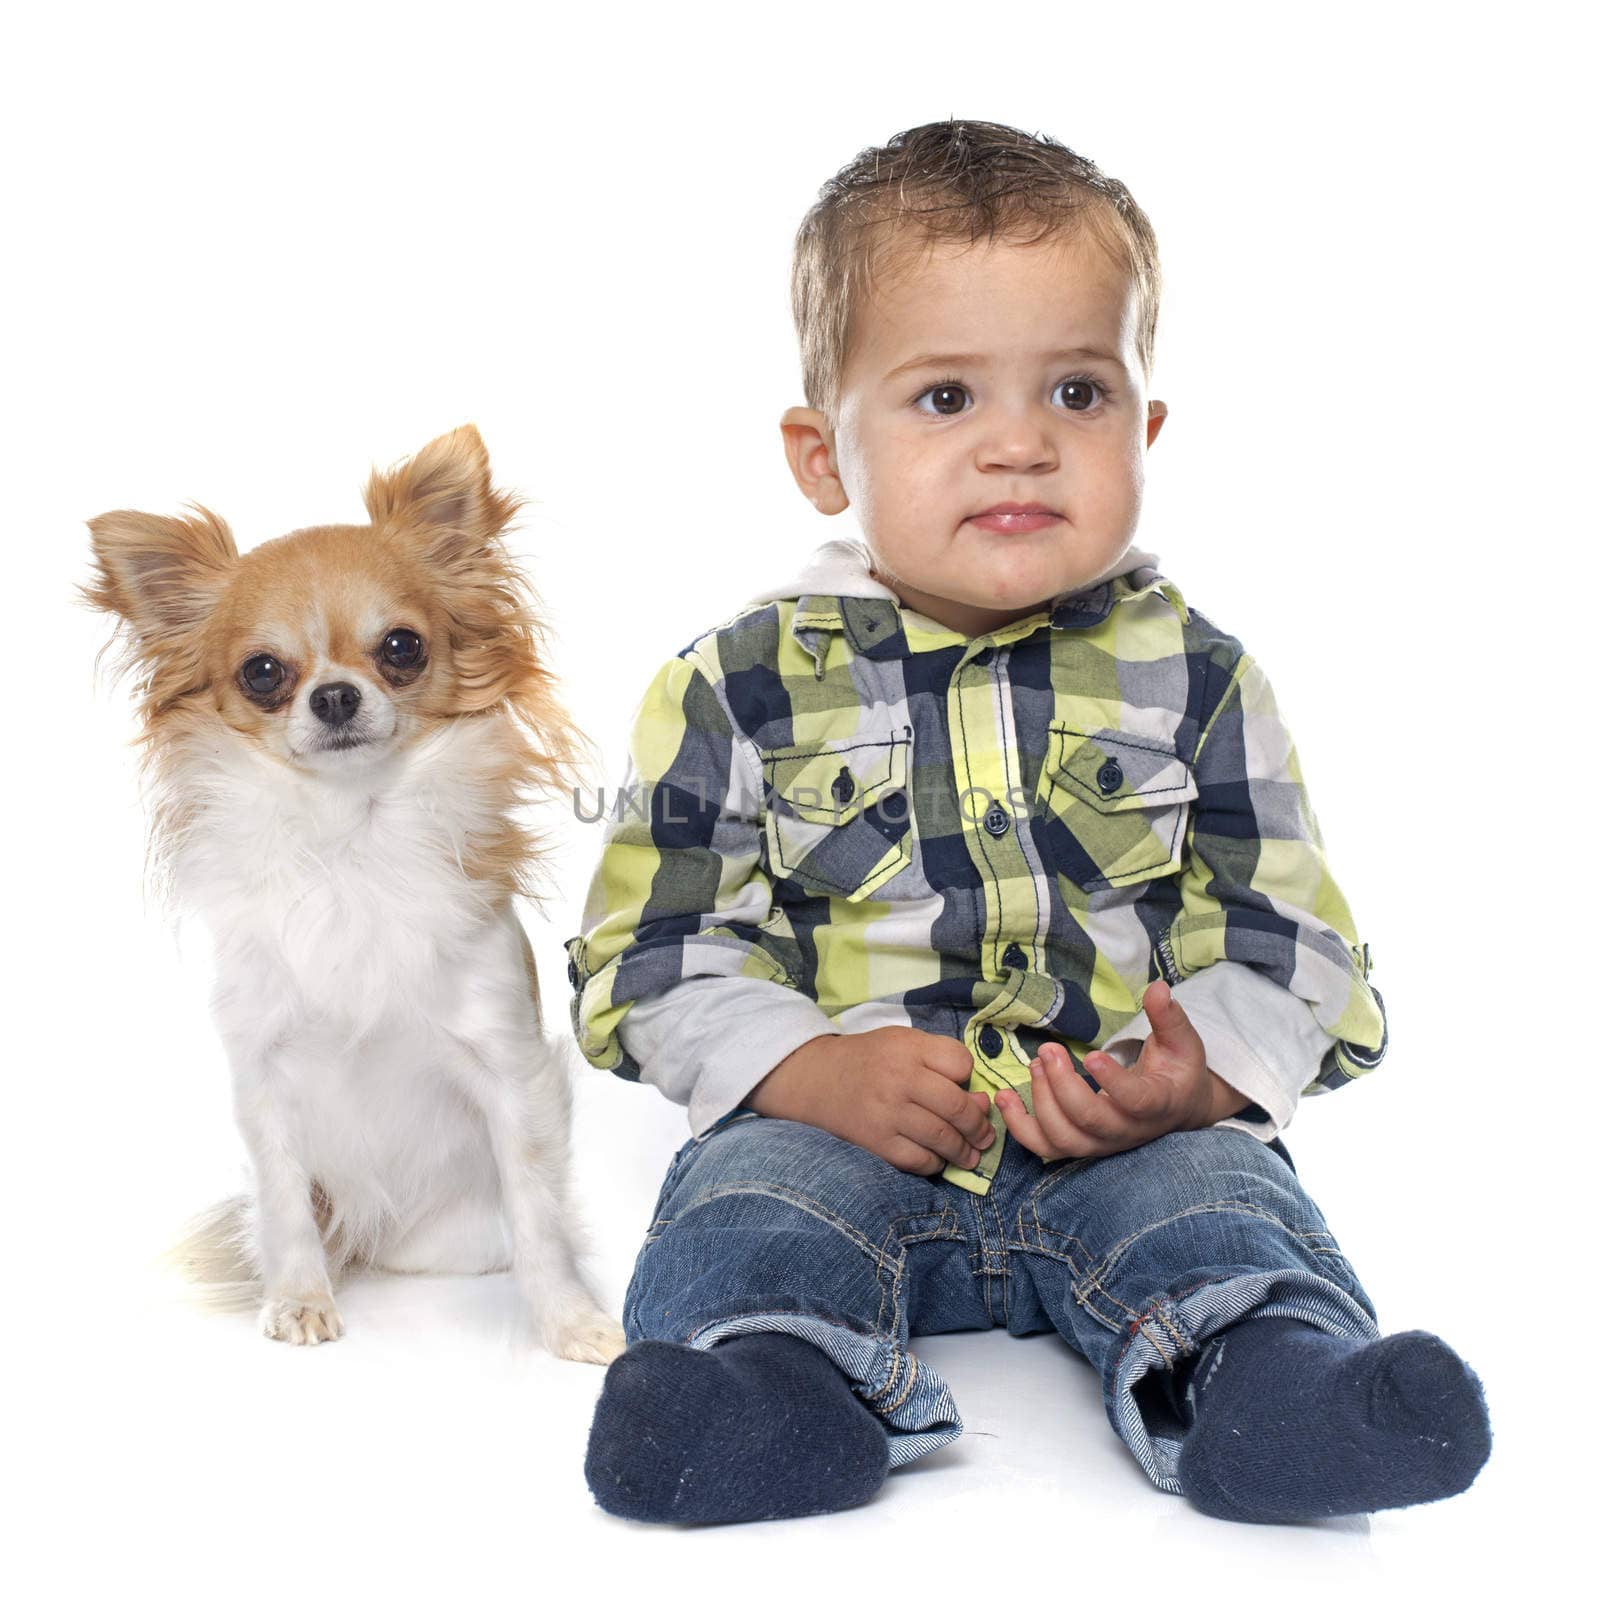 little boy and chihuahua by cynoclub